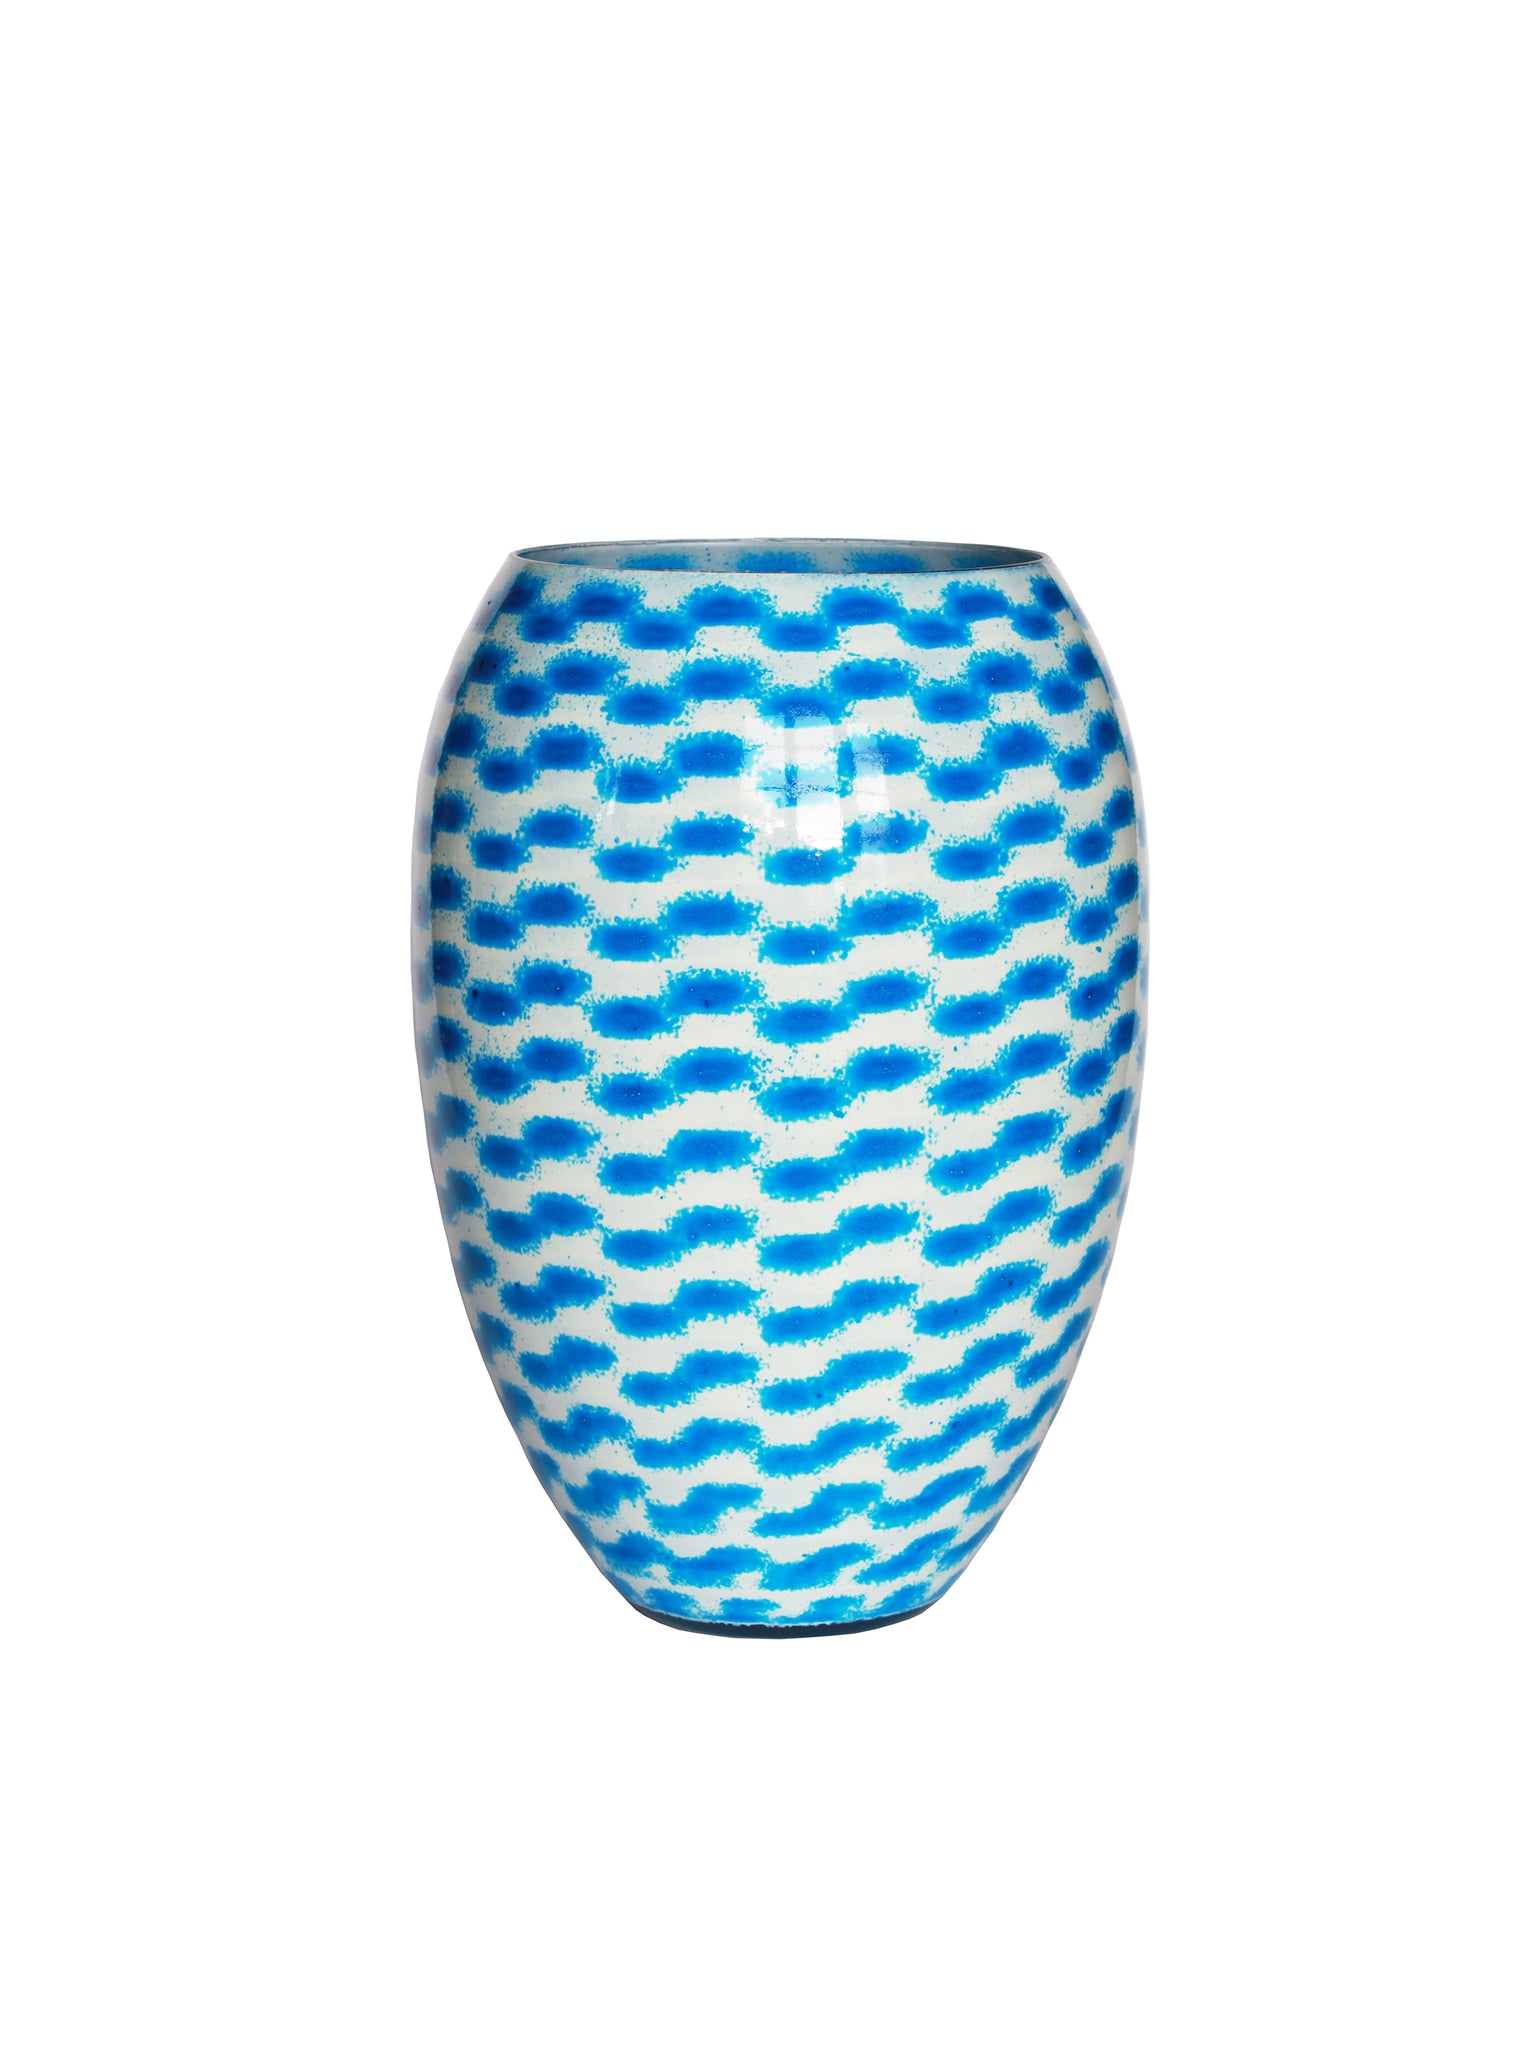 RIVER Barrel XL, Blue & White, 22.5 cm / 8.9”